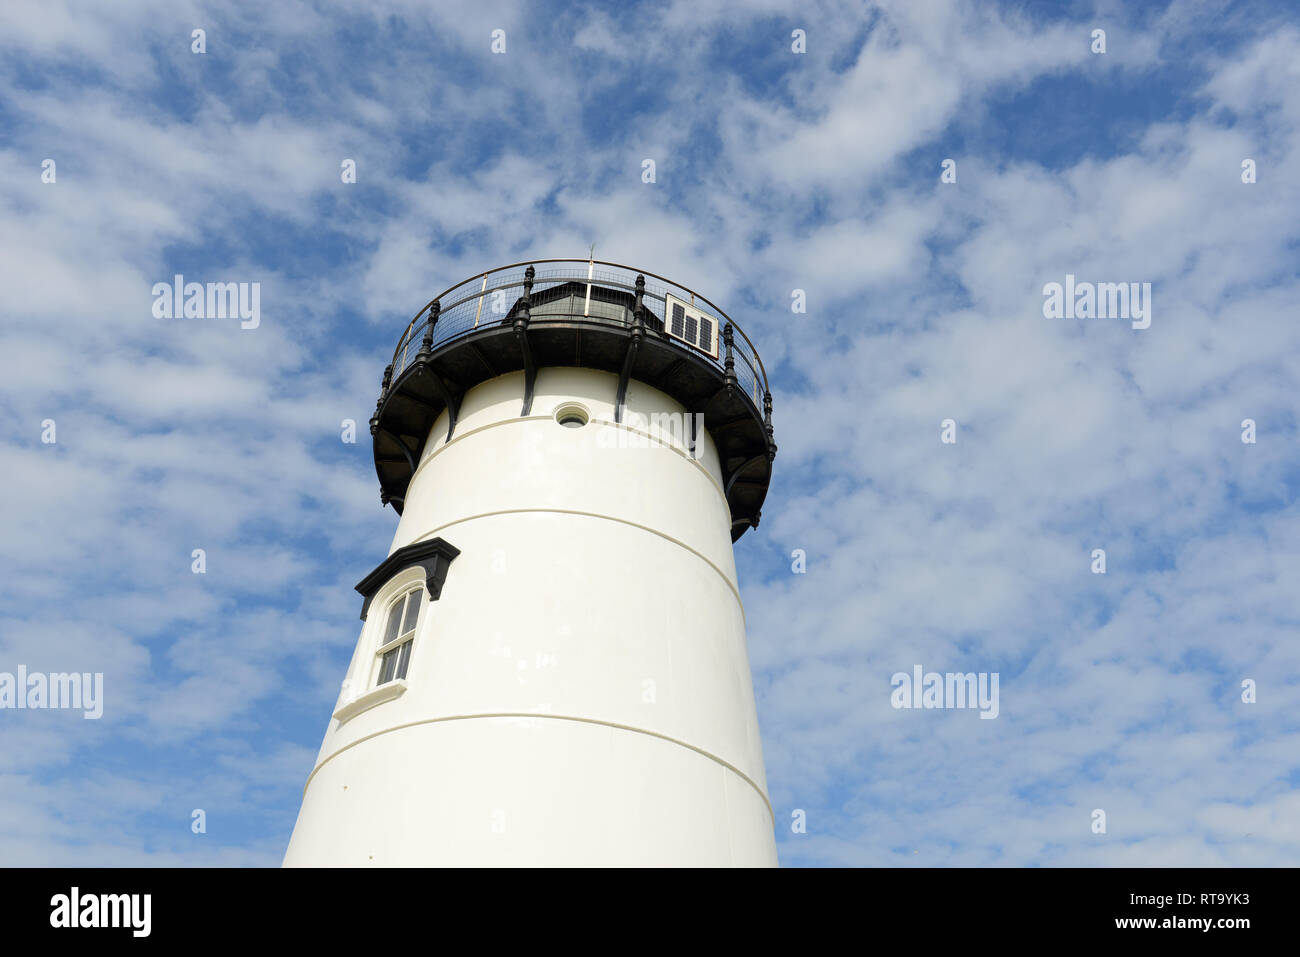 Edgartown Harbor Lighthouse at the entrance into Edgartown Harbor and Katama Bay, Martha's Vineyard, Massachusetts, USA. This historic lighthouse was Stock Photo